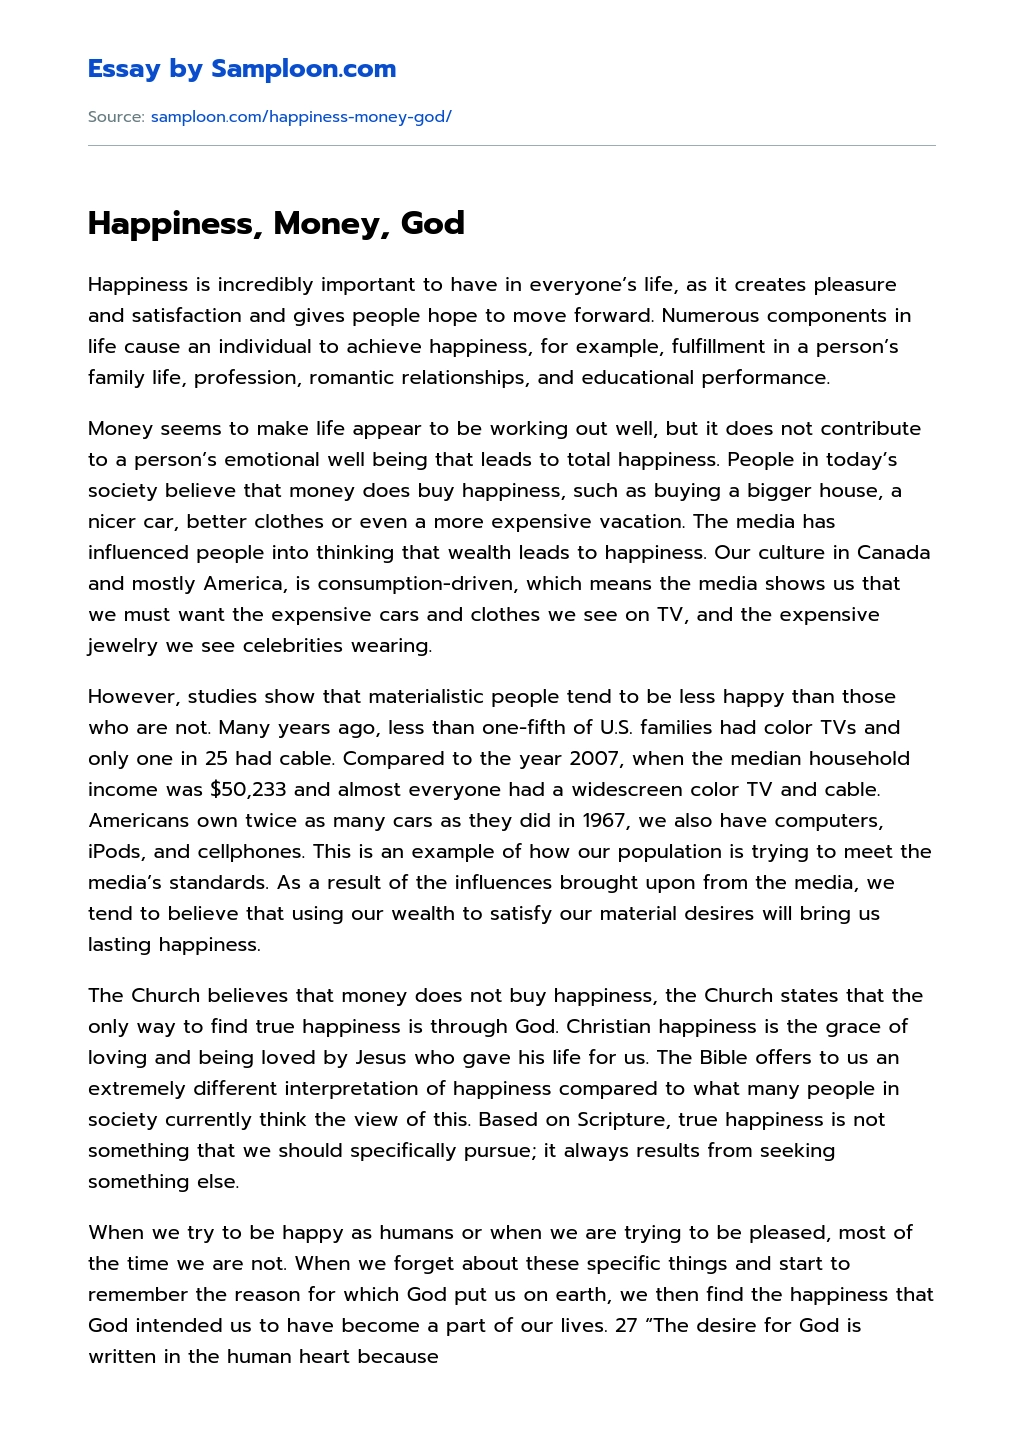 money buys happiness argumentative essay